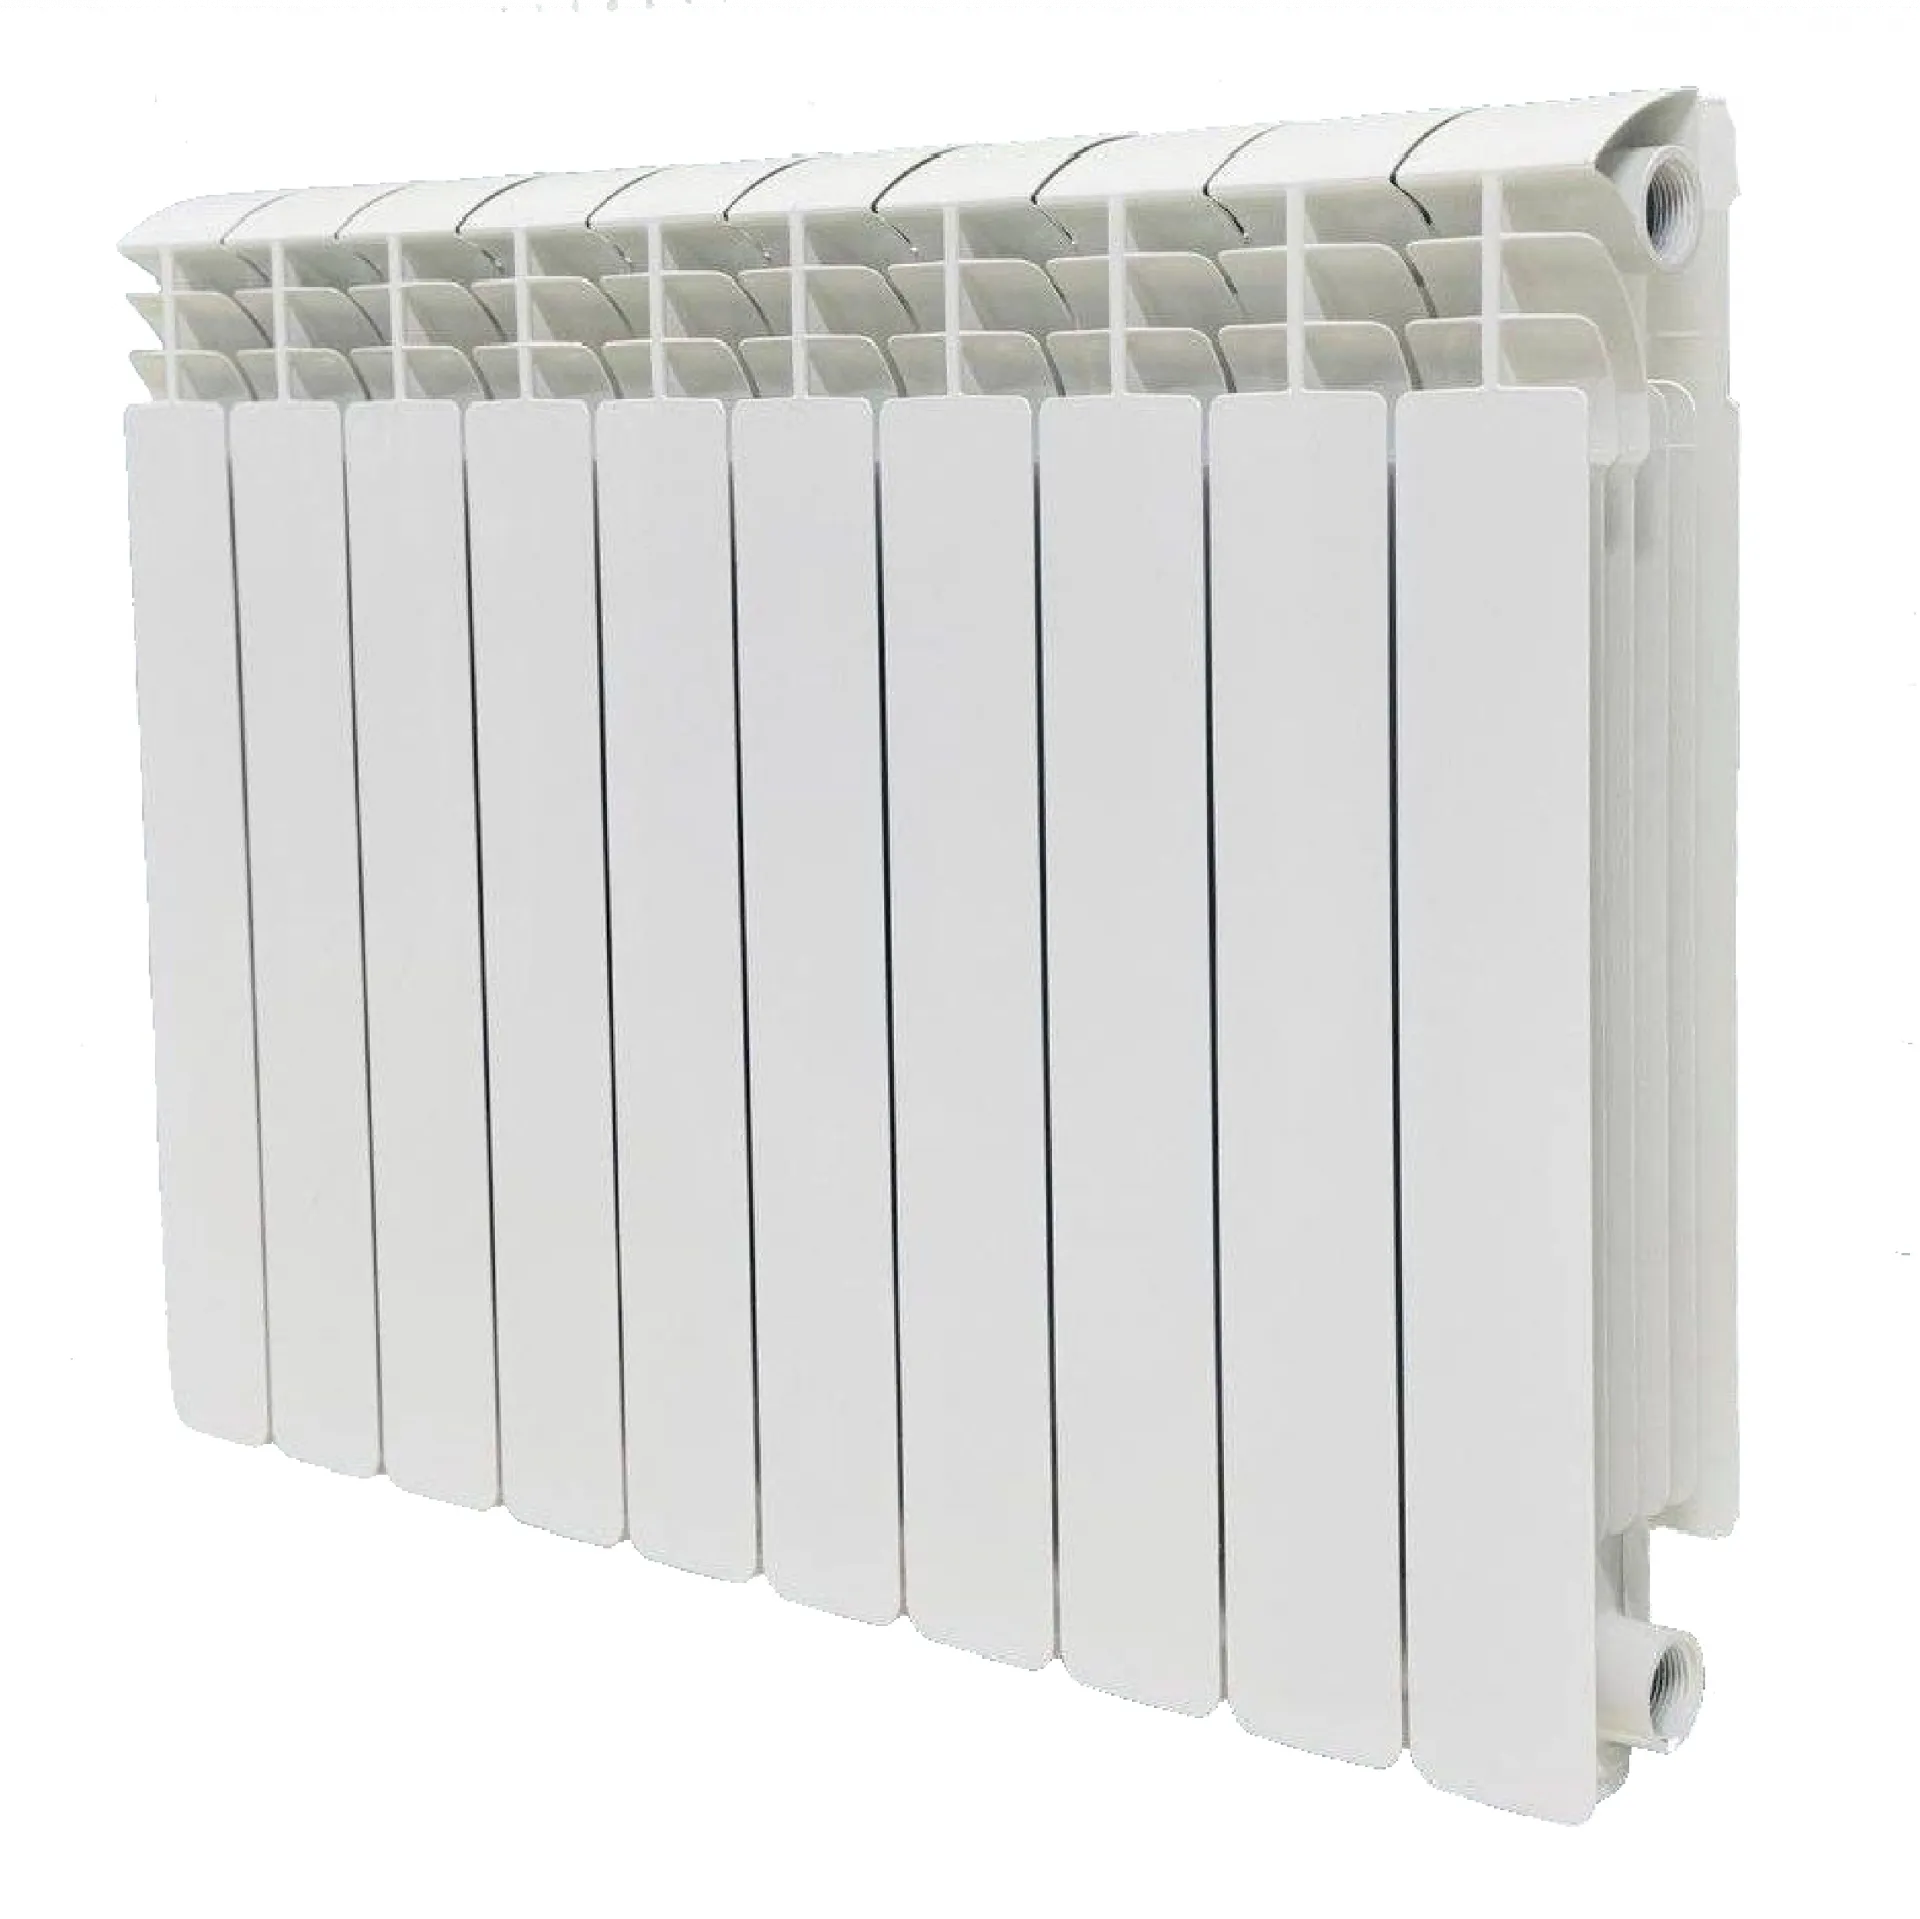 Alyumin radiator#1